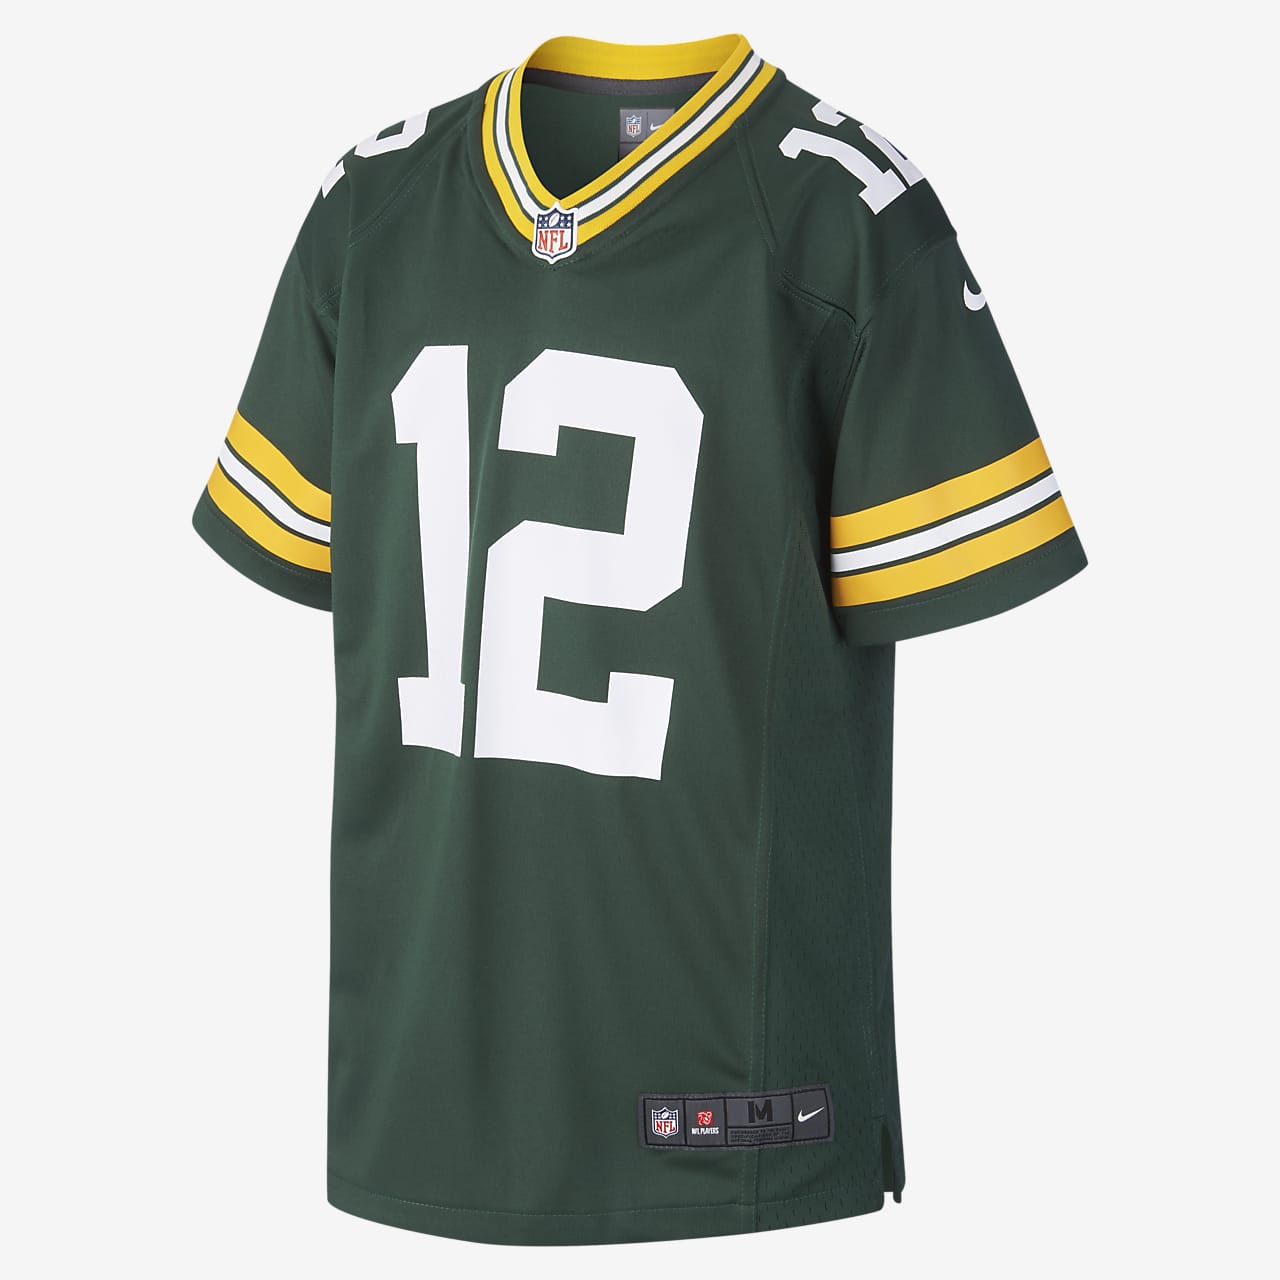 Principiante Gorrión montón NFL Green Bay Packers Game Jersey (Aaron Rodgers) Camiseta de fútbol  americano - Niño/a. Nike ES